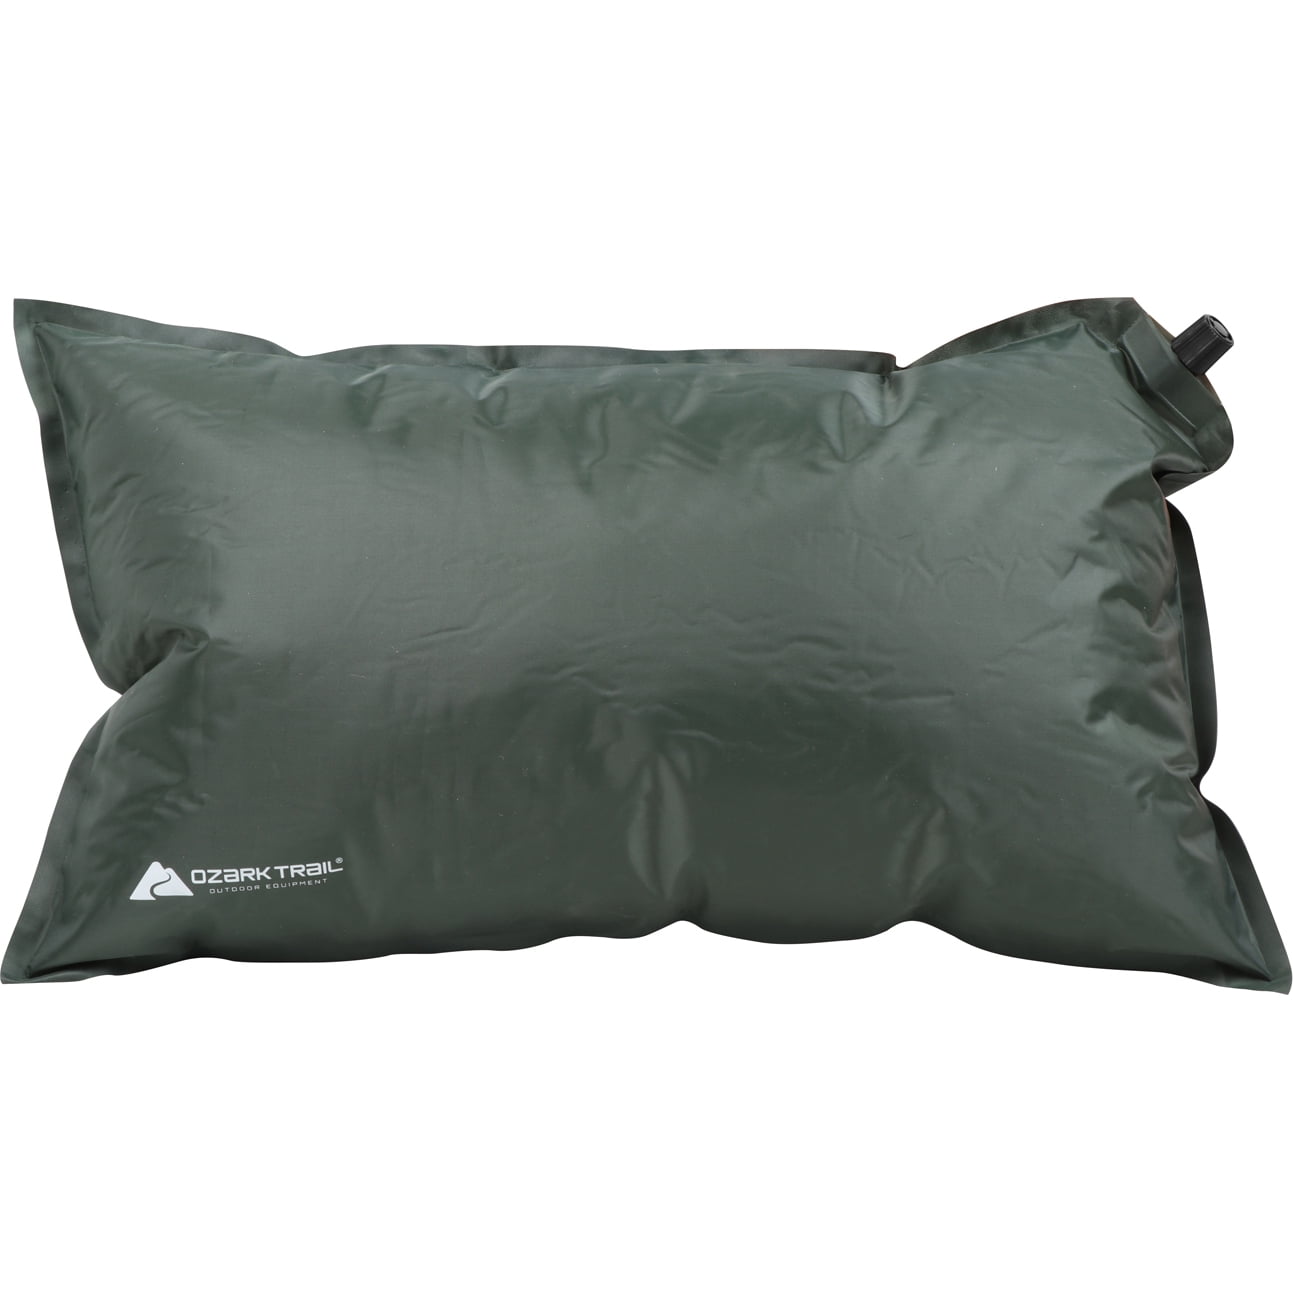 inflatable pillow walmart